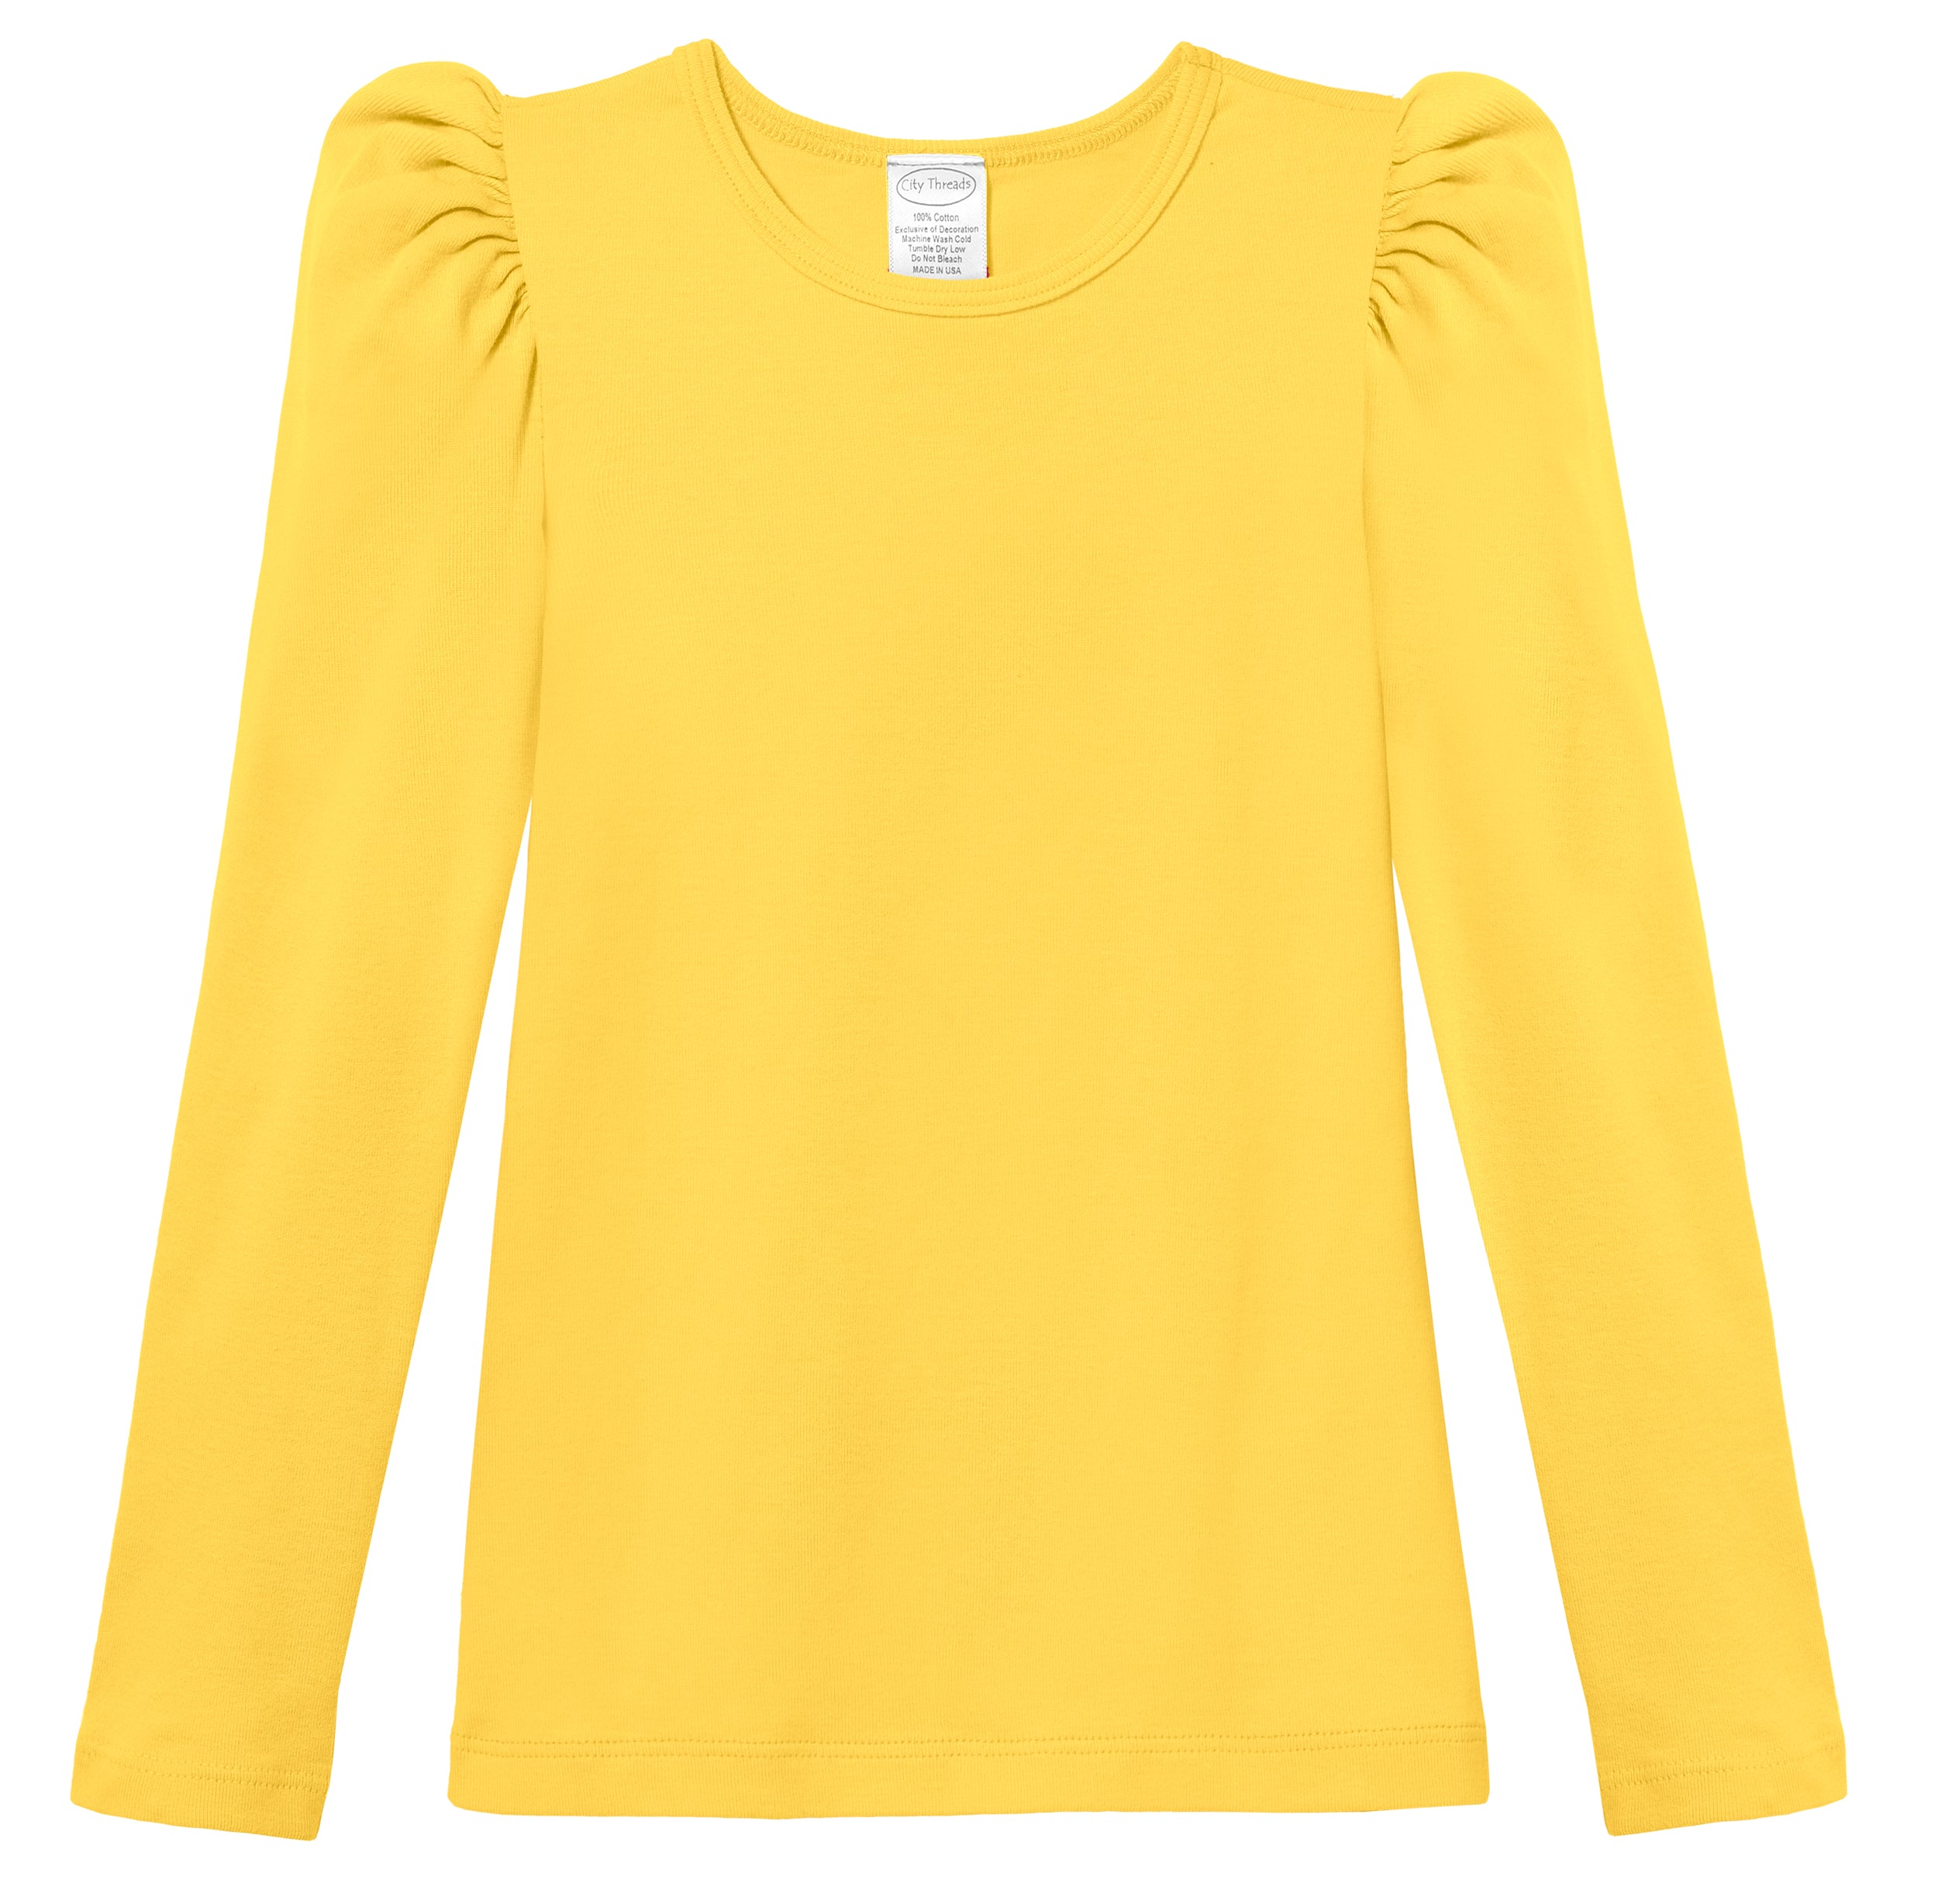 girls yellow long sleeve shirt